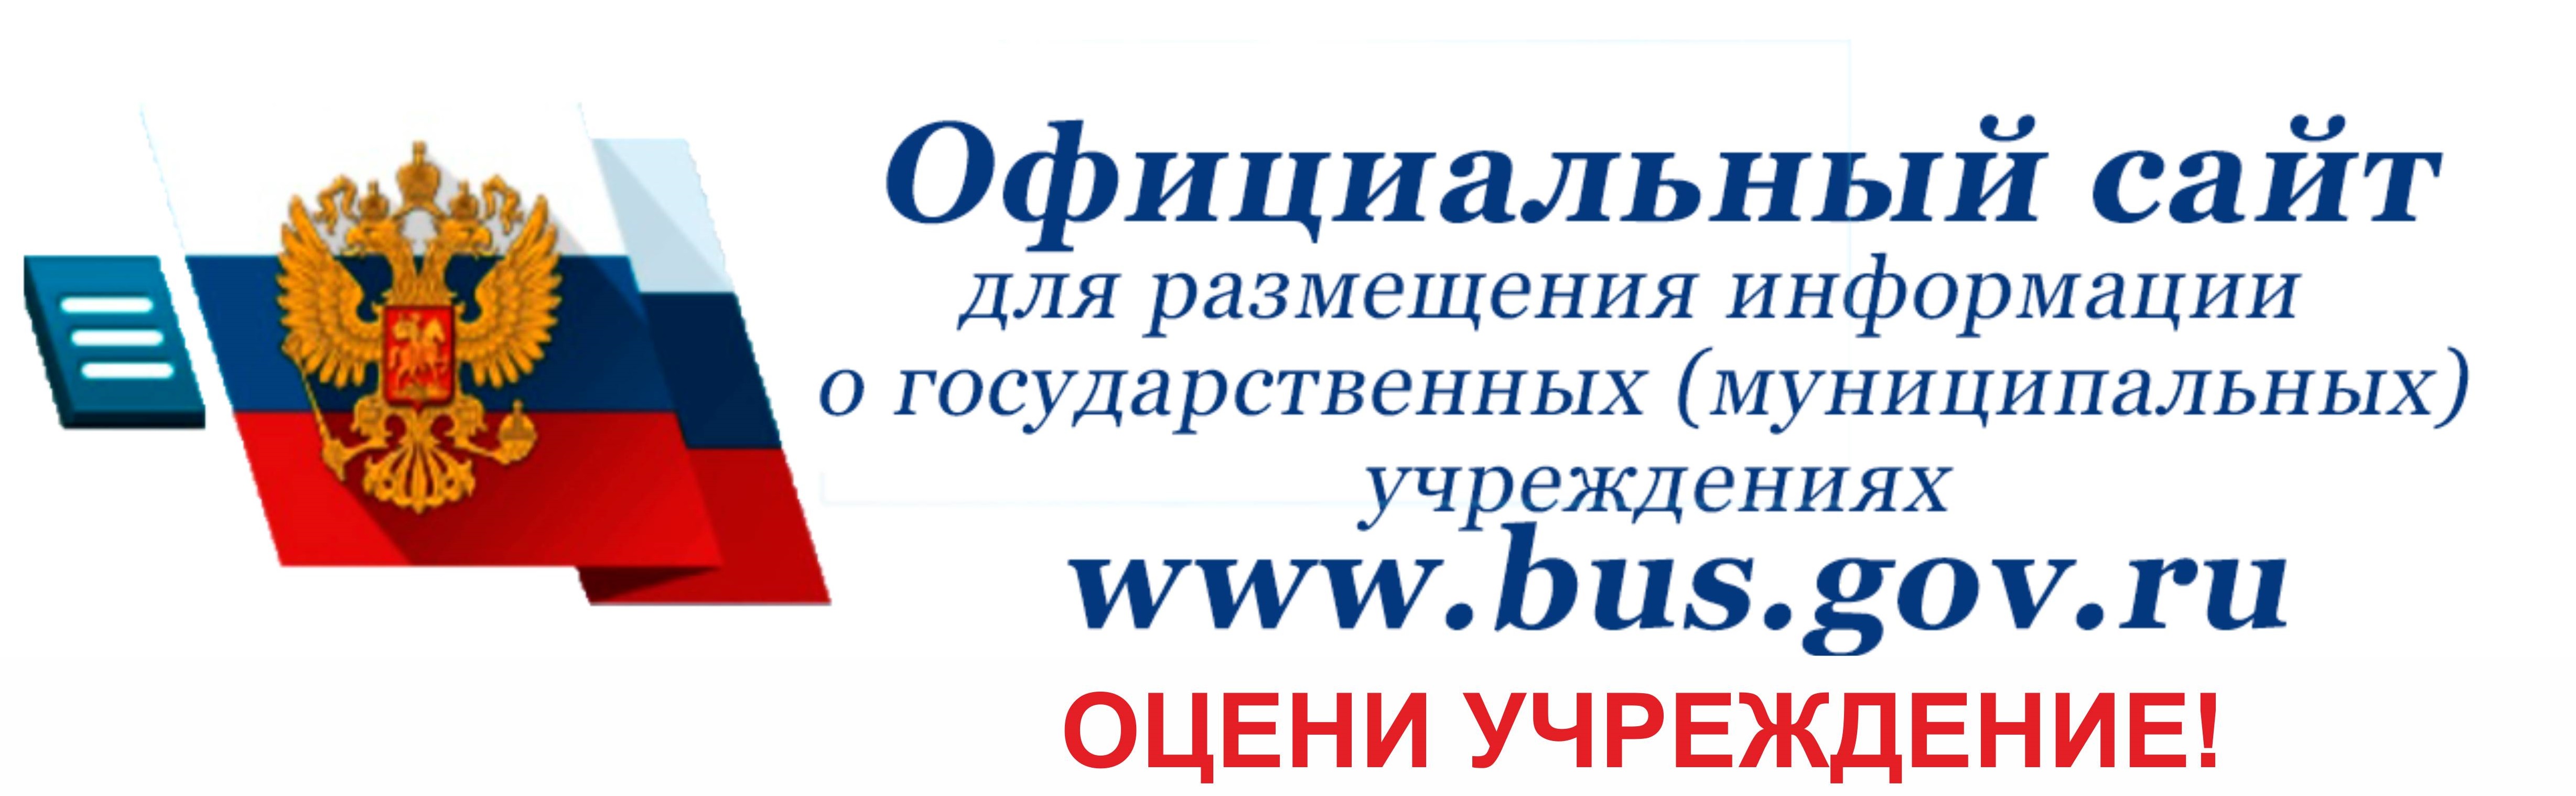 Сайт бас гоф ру. Бас гов. Bus.gov.ru баннер. Bus.gov.ru логотип. Bus gov баннер.